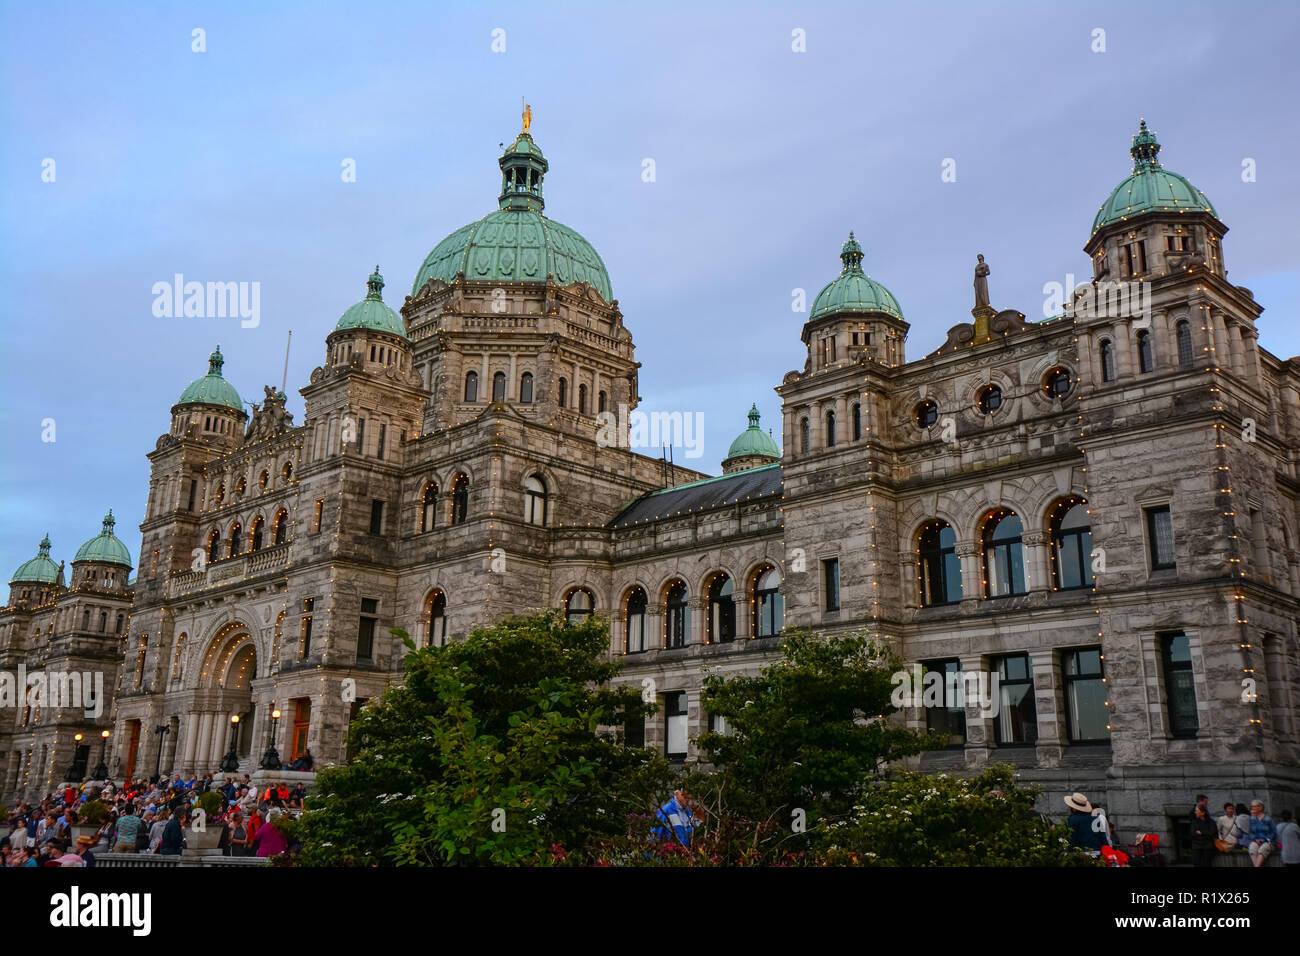 Legislative Building of Victoria BC capital of British Columbia Vancouver Island Canada Stock Photo